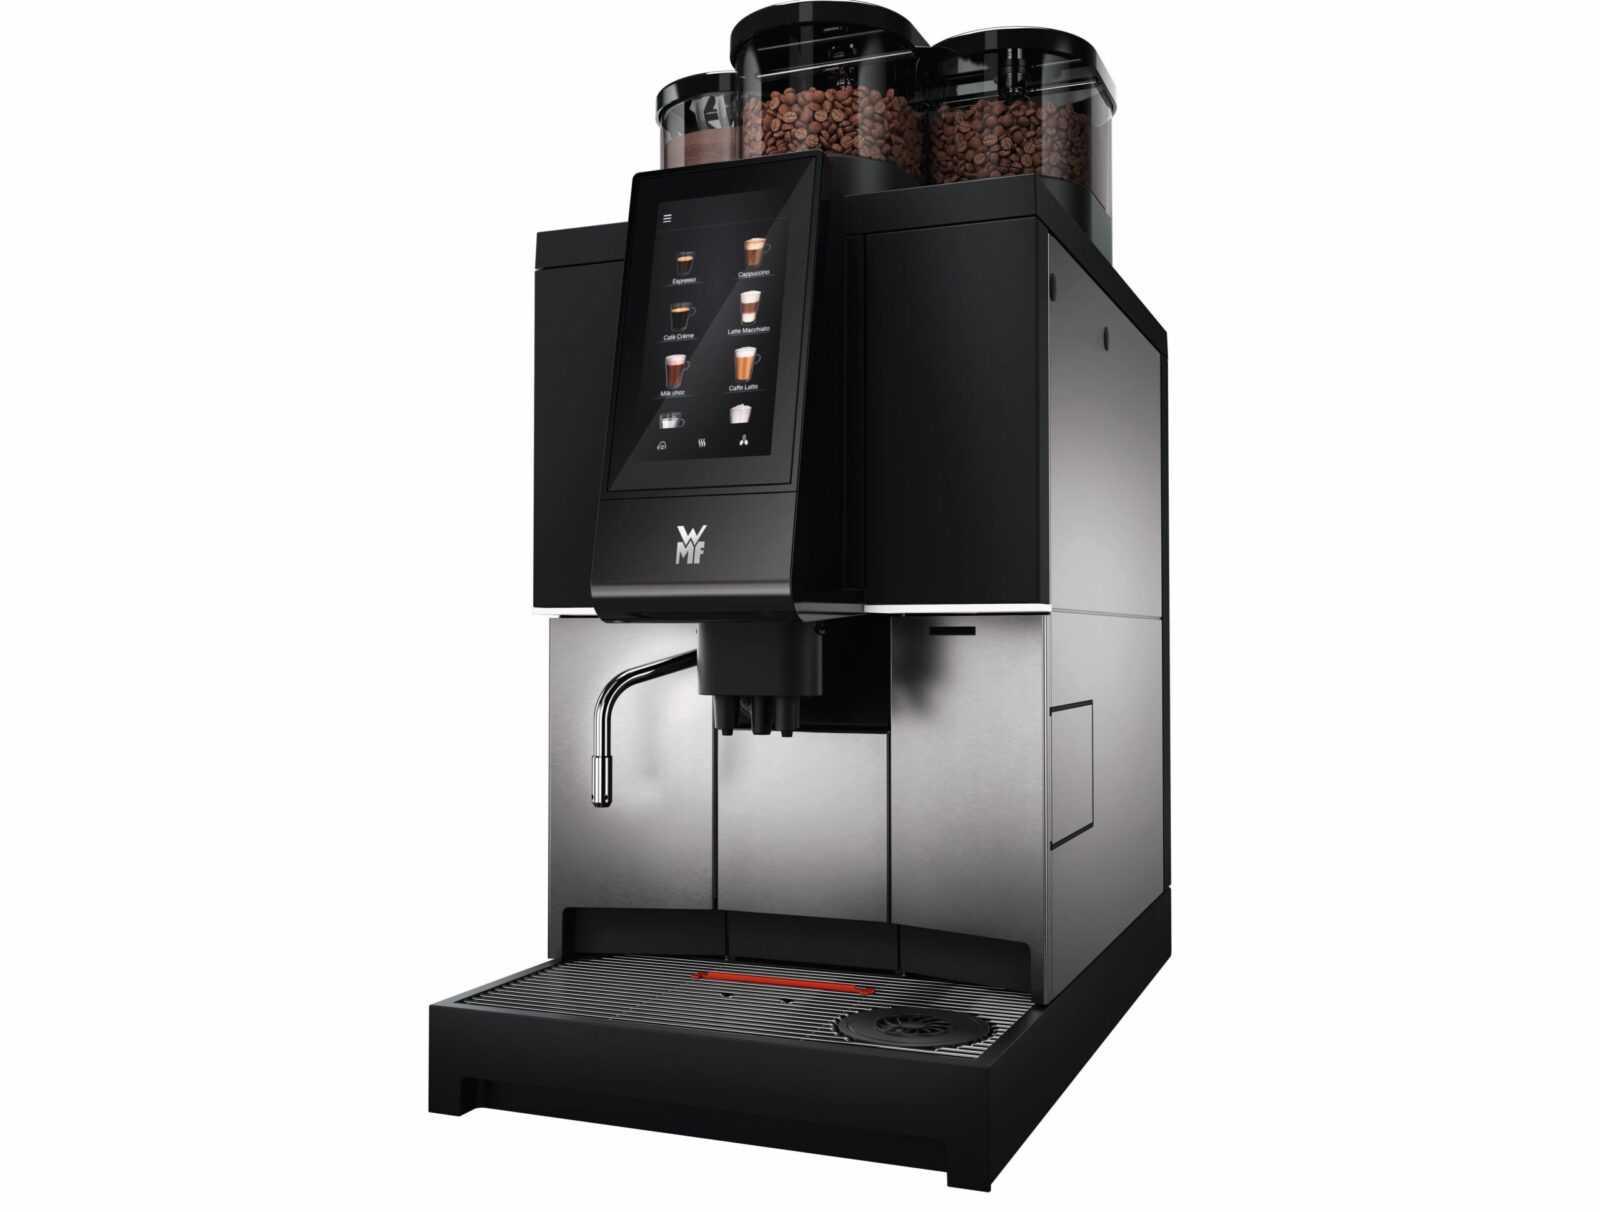 Wmf Celebrates The Launch Of New Automatic Coffee Machine Wmf 1300 S